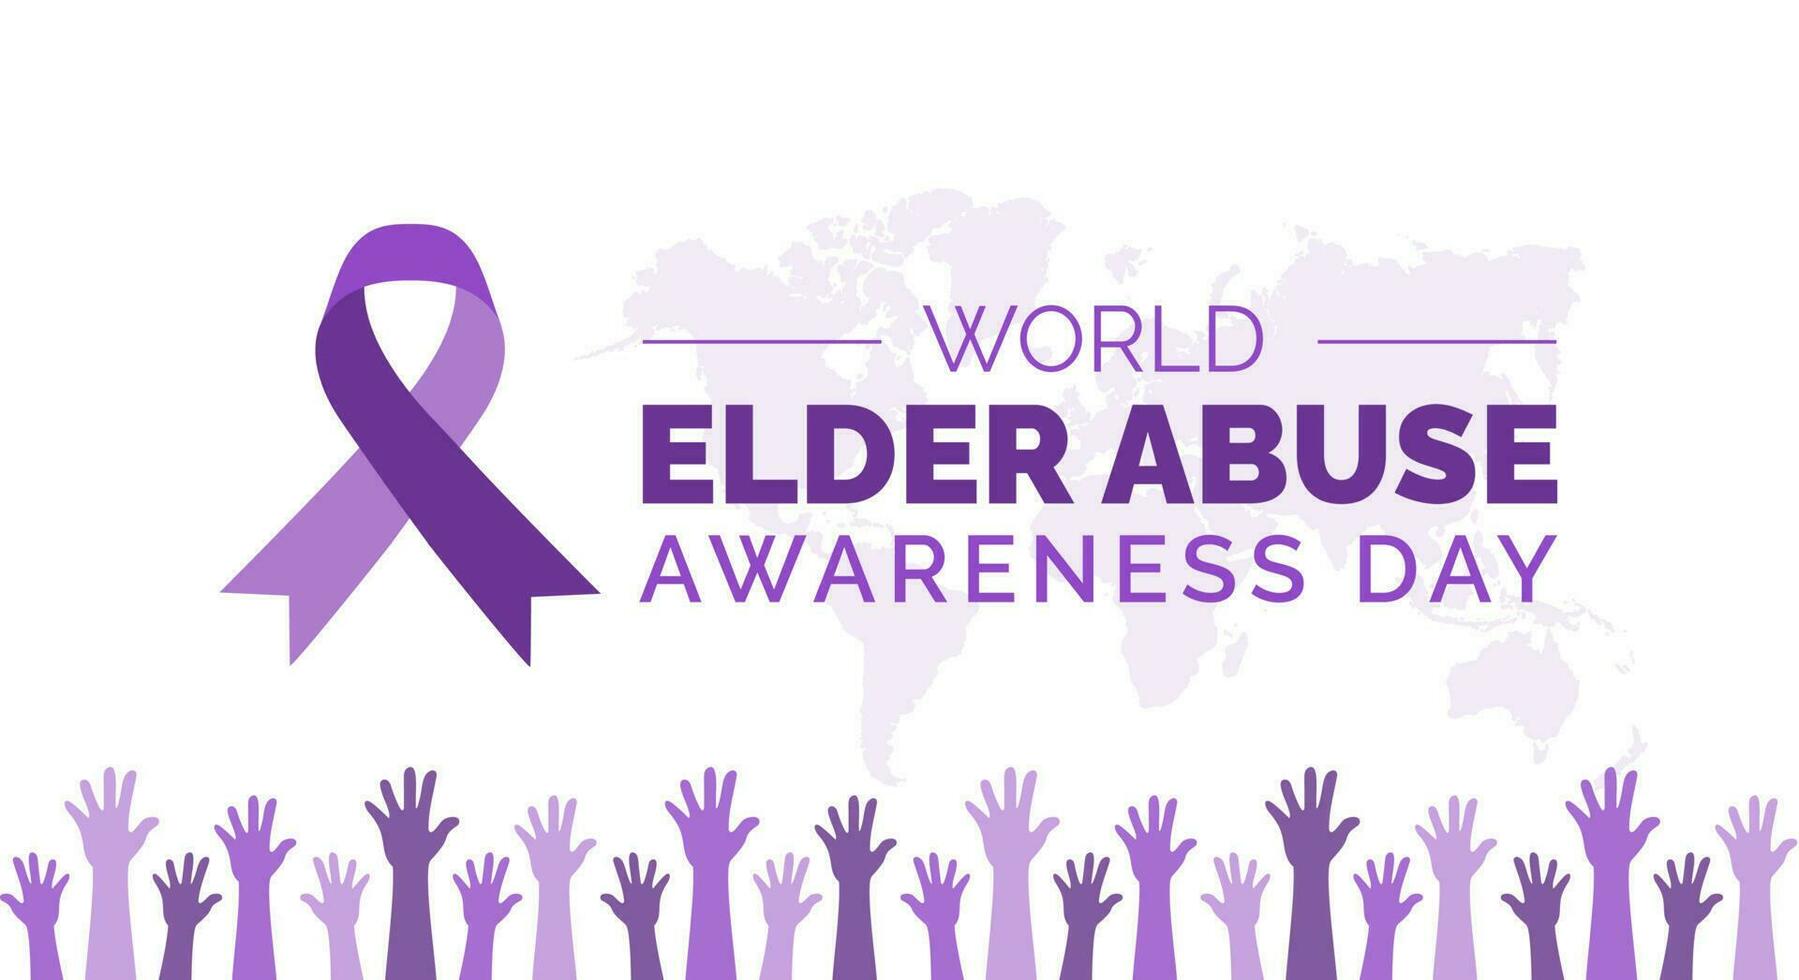 World Elder Abuse Awareness Day background or banner design template. vector